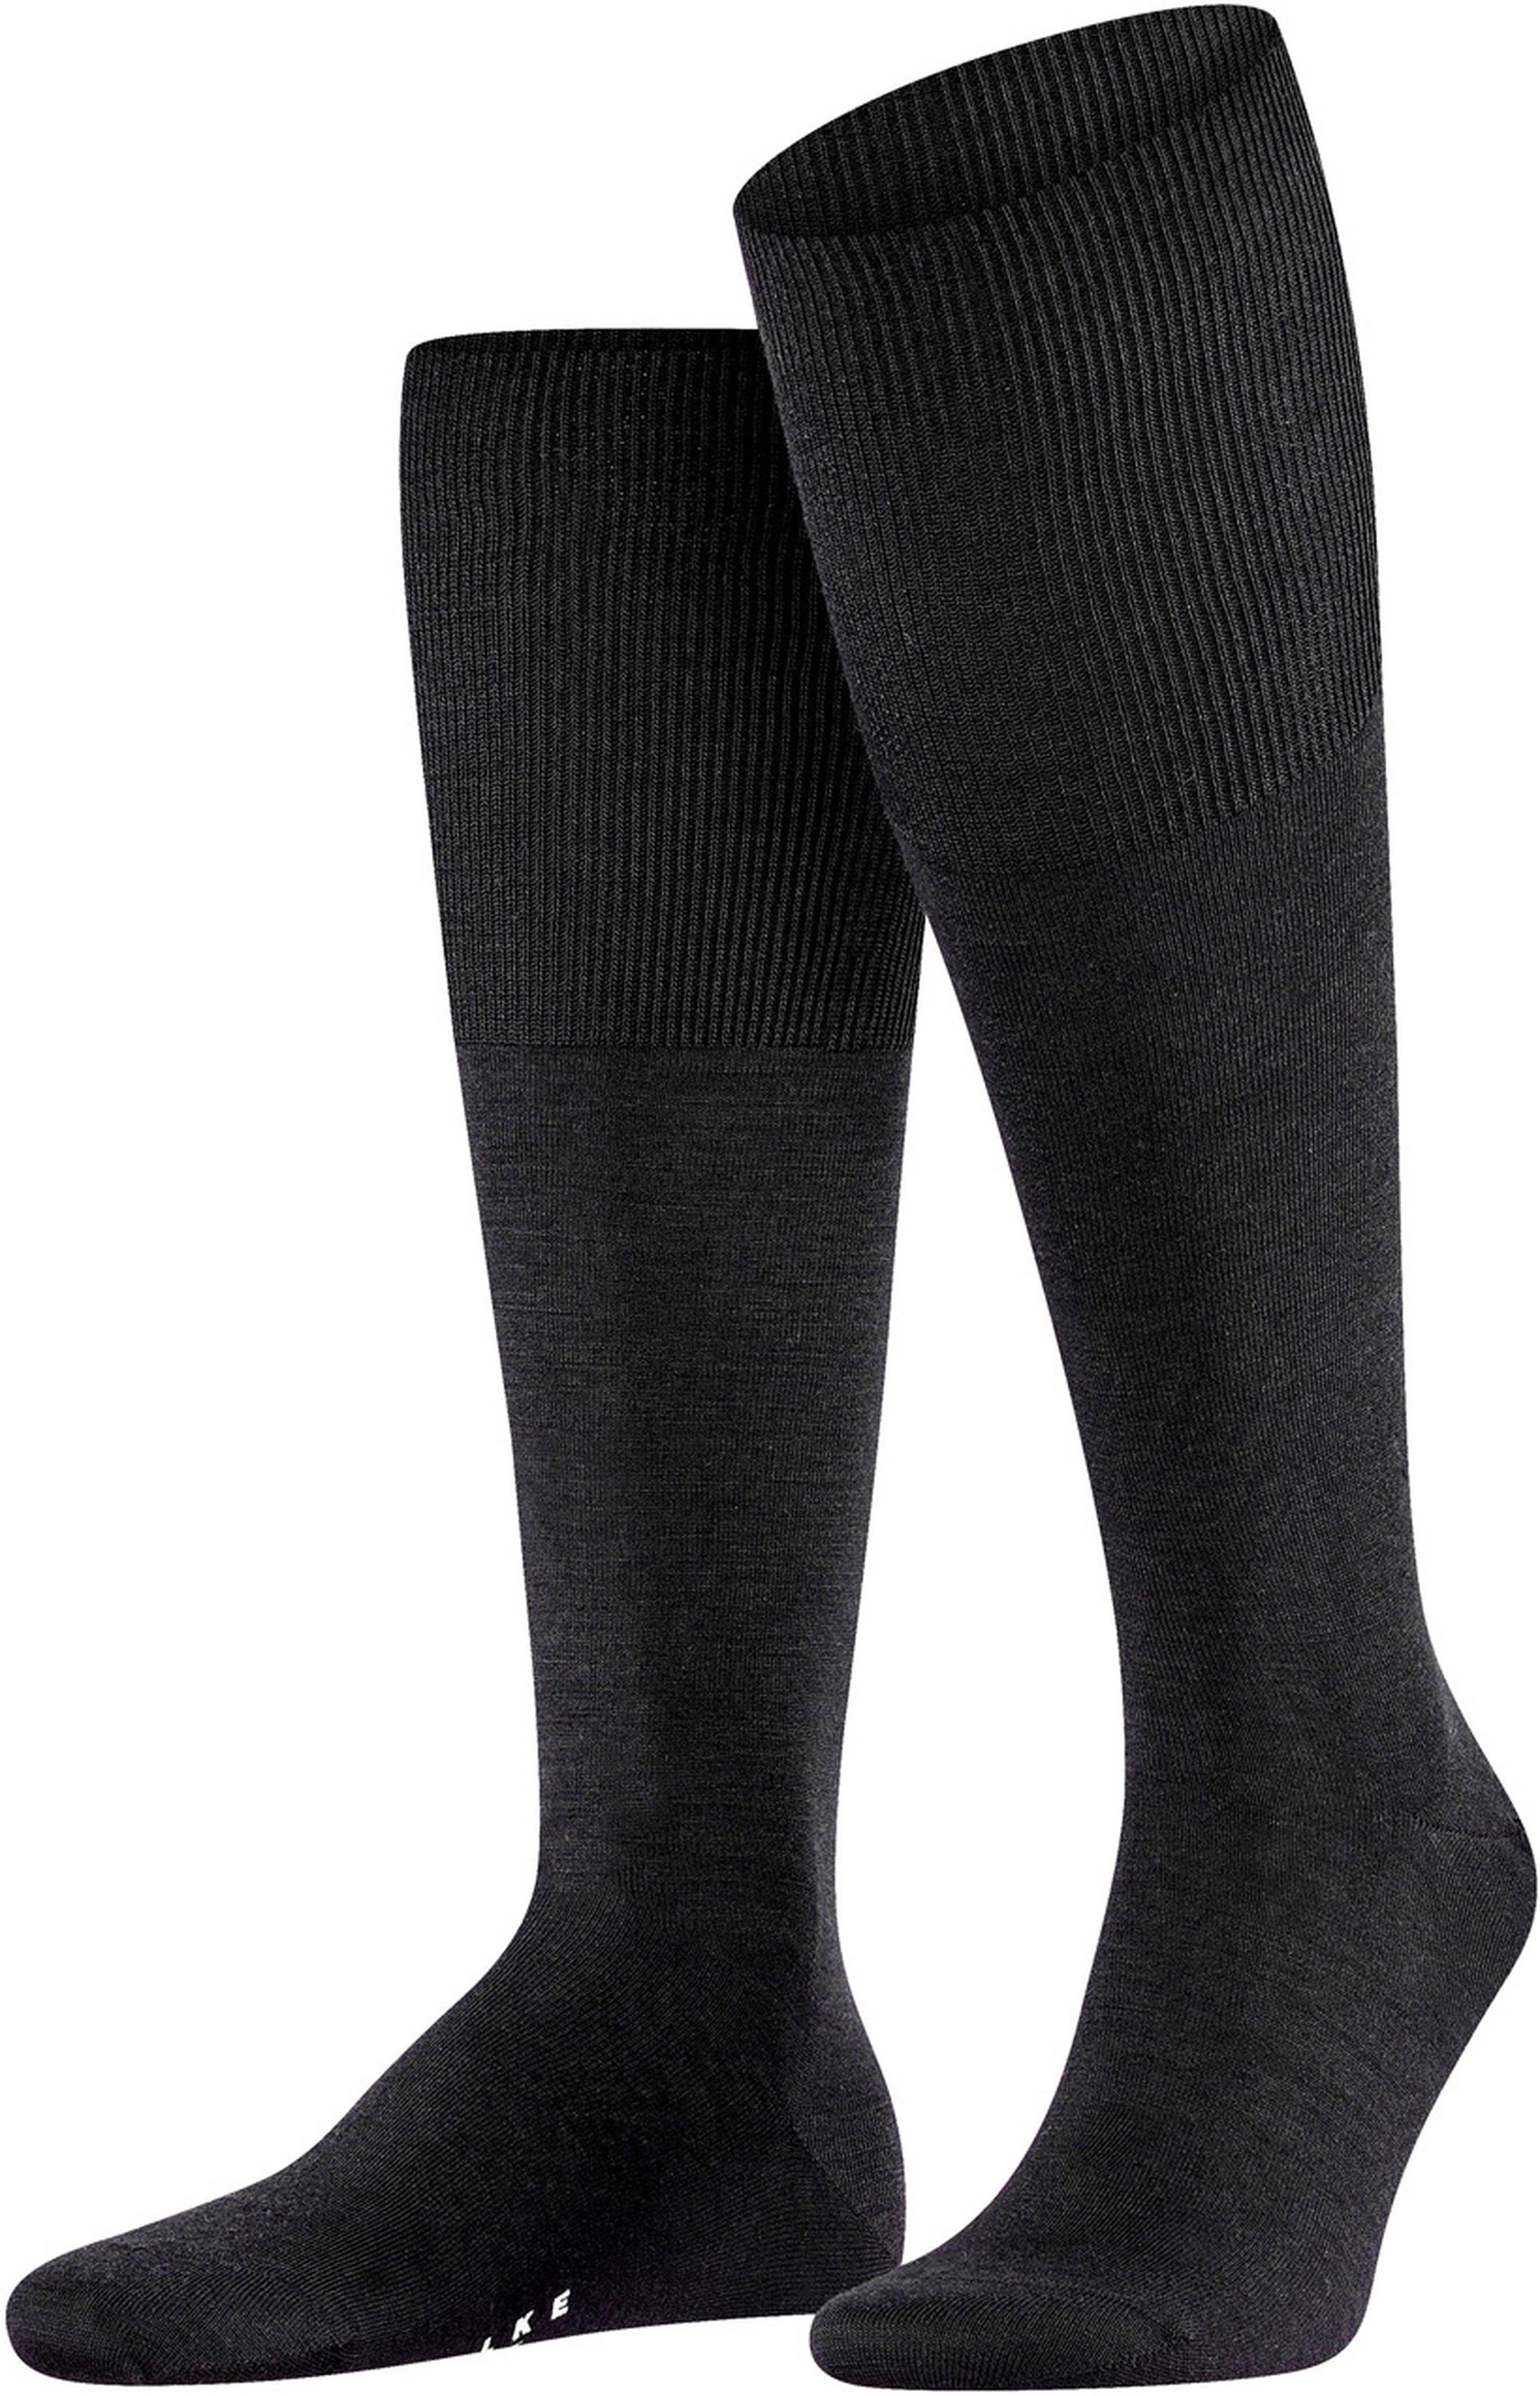 Falke Airport Knee Socks 3000 Black size 39-40